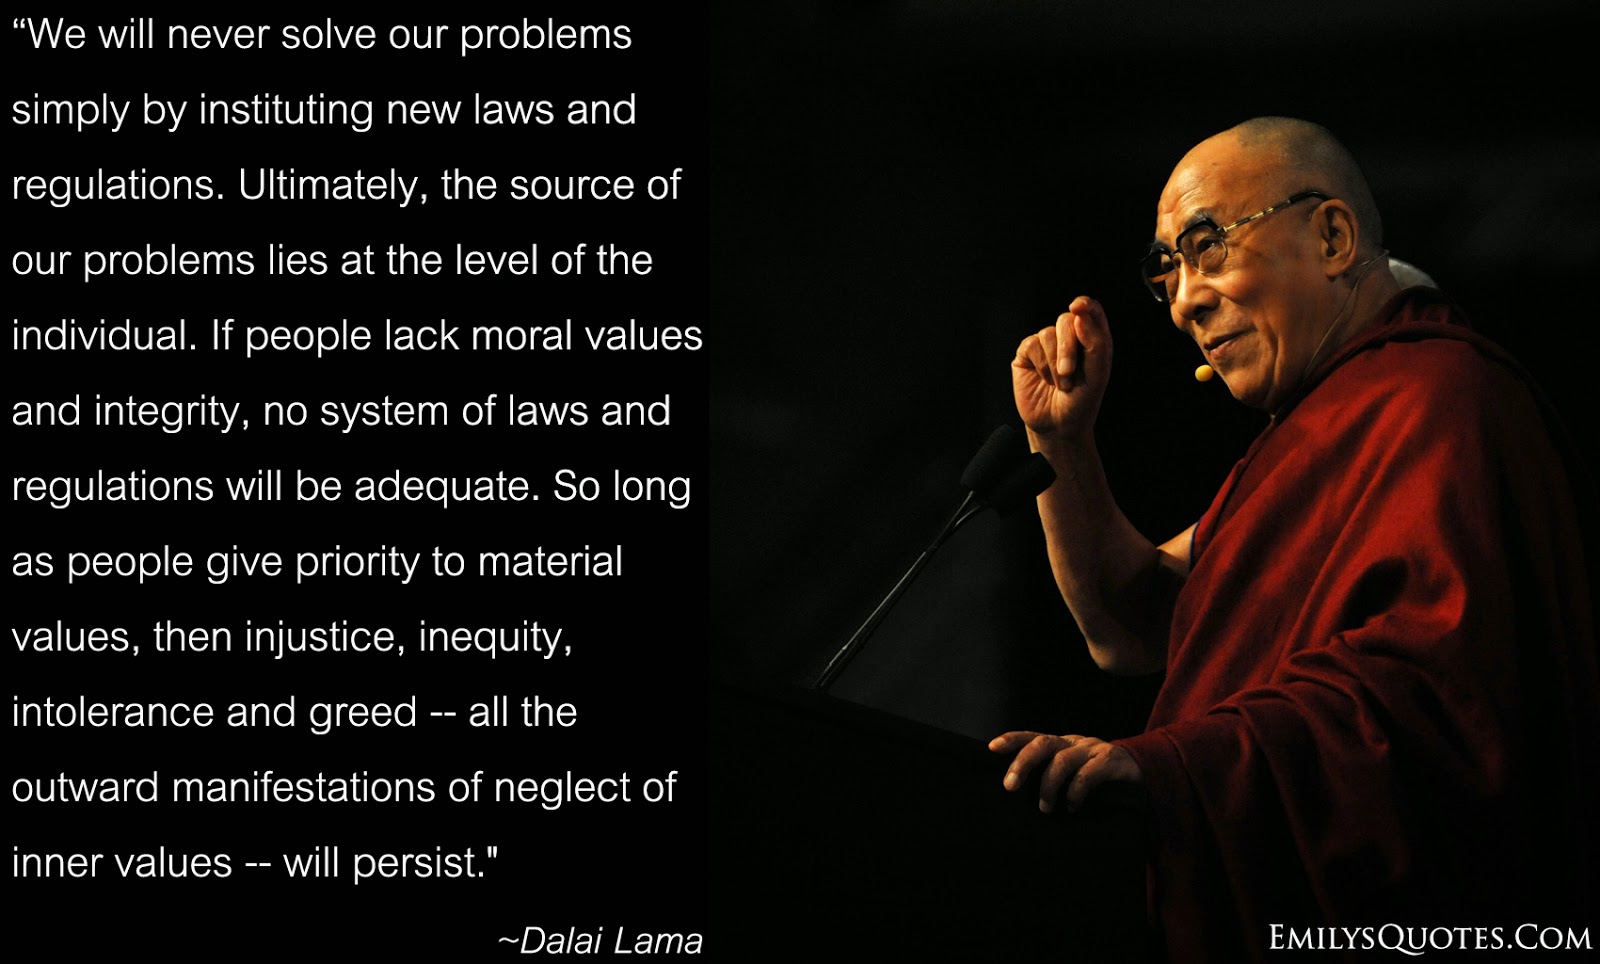 dalai lama quotes on death